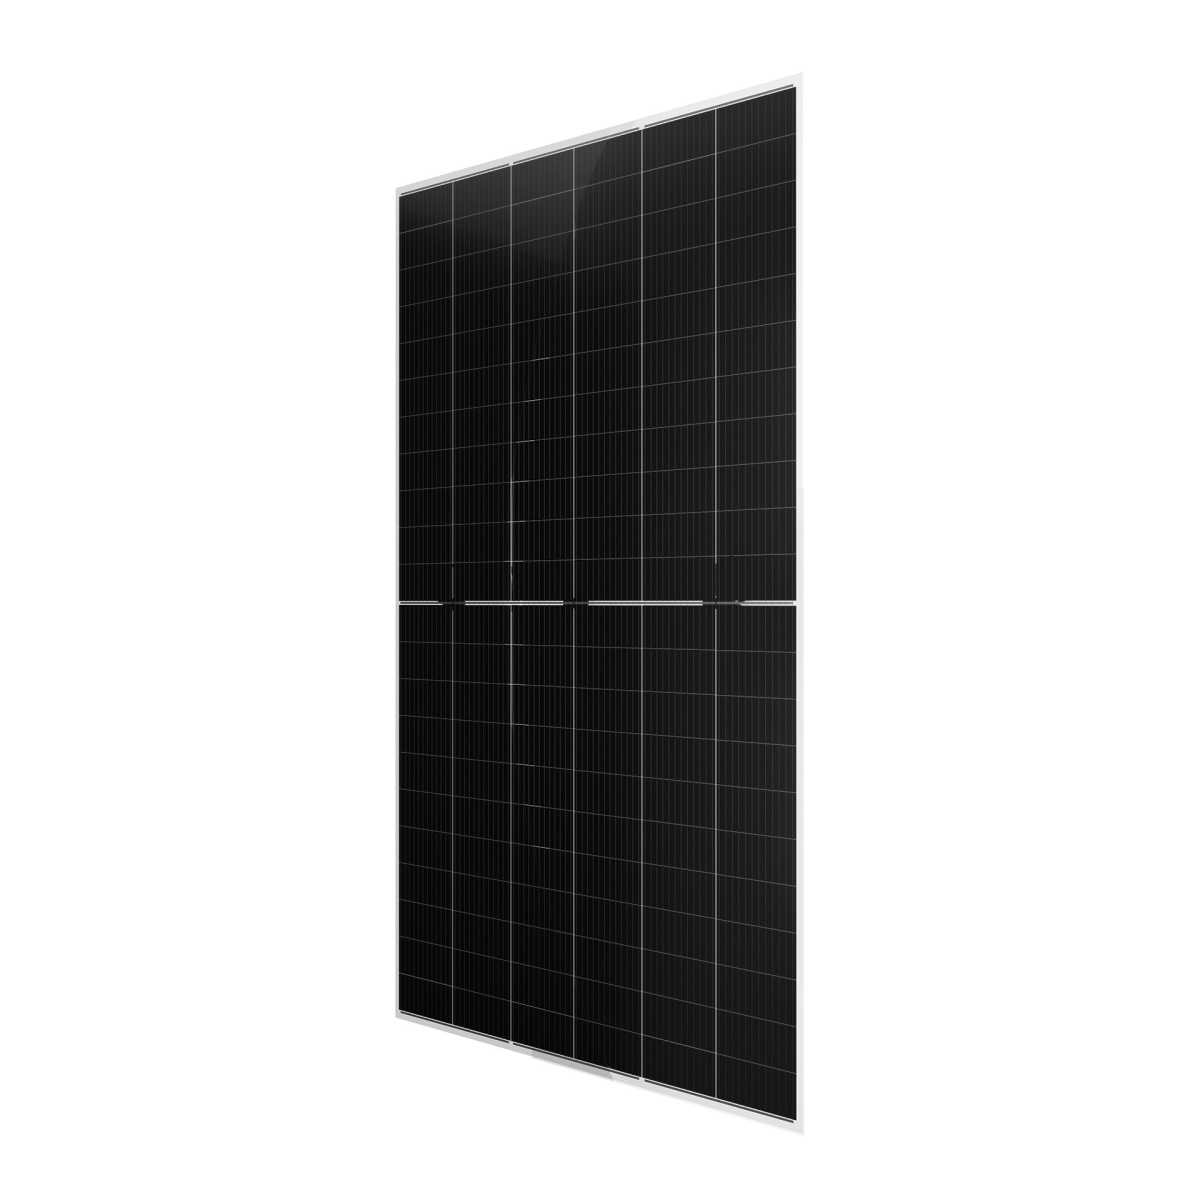 TommaTech 665Wp M12 132PM Cells Bifacial G2G Half-Cut MB Solar Panel